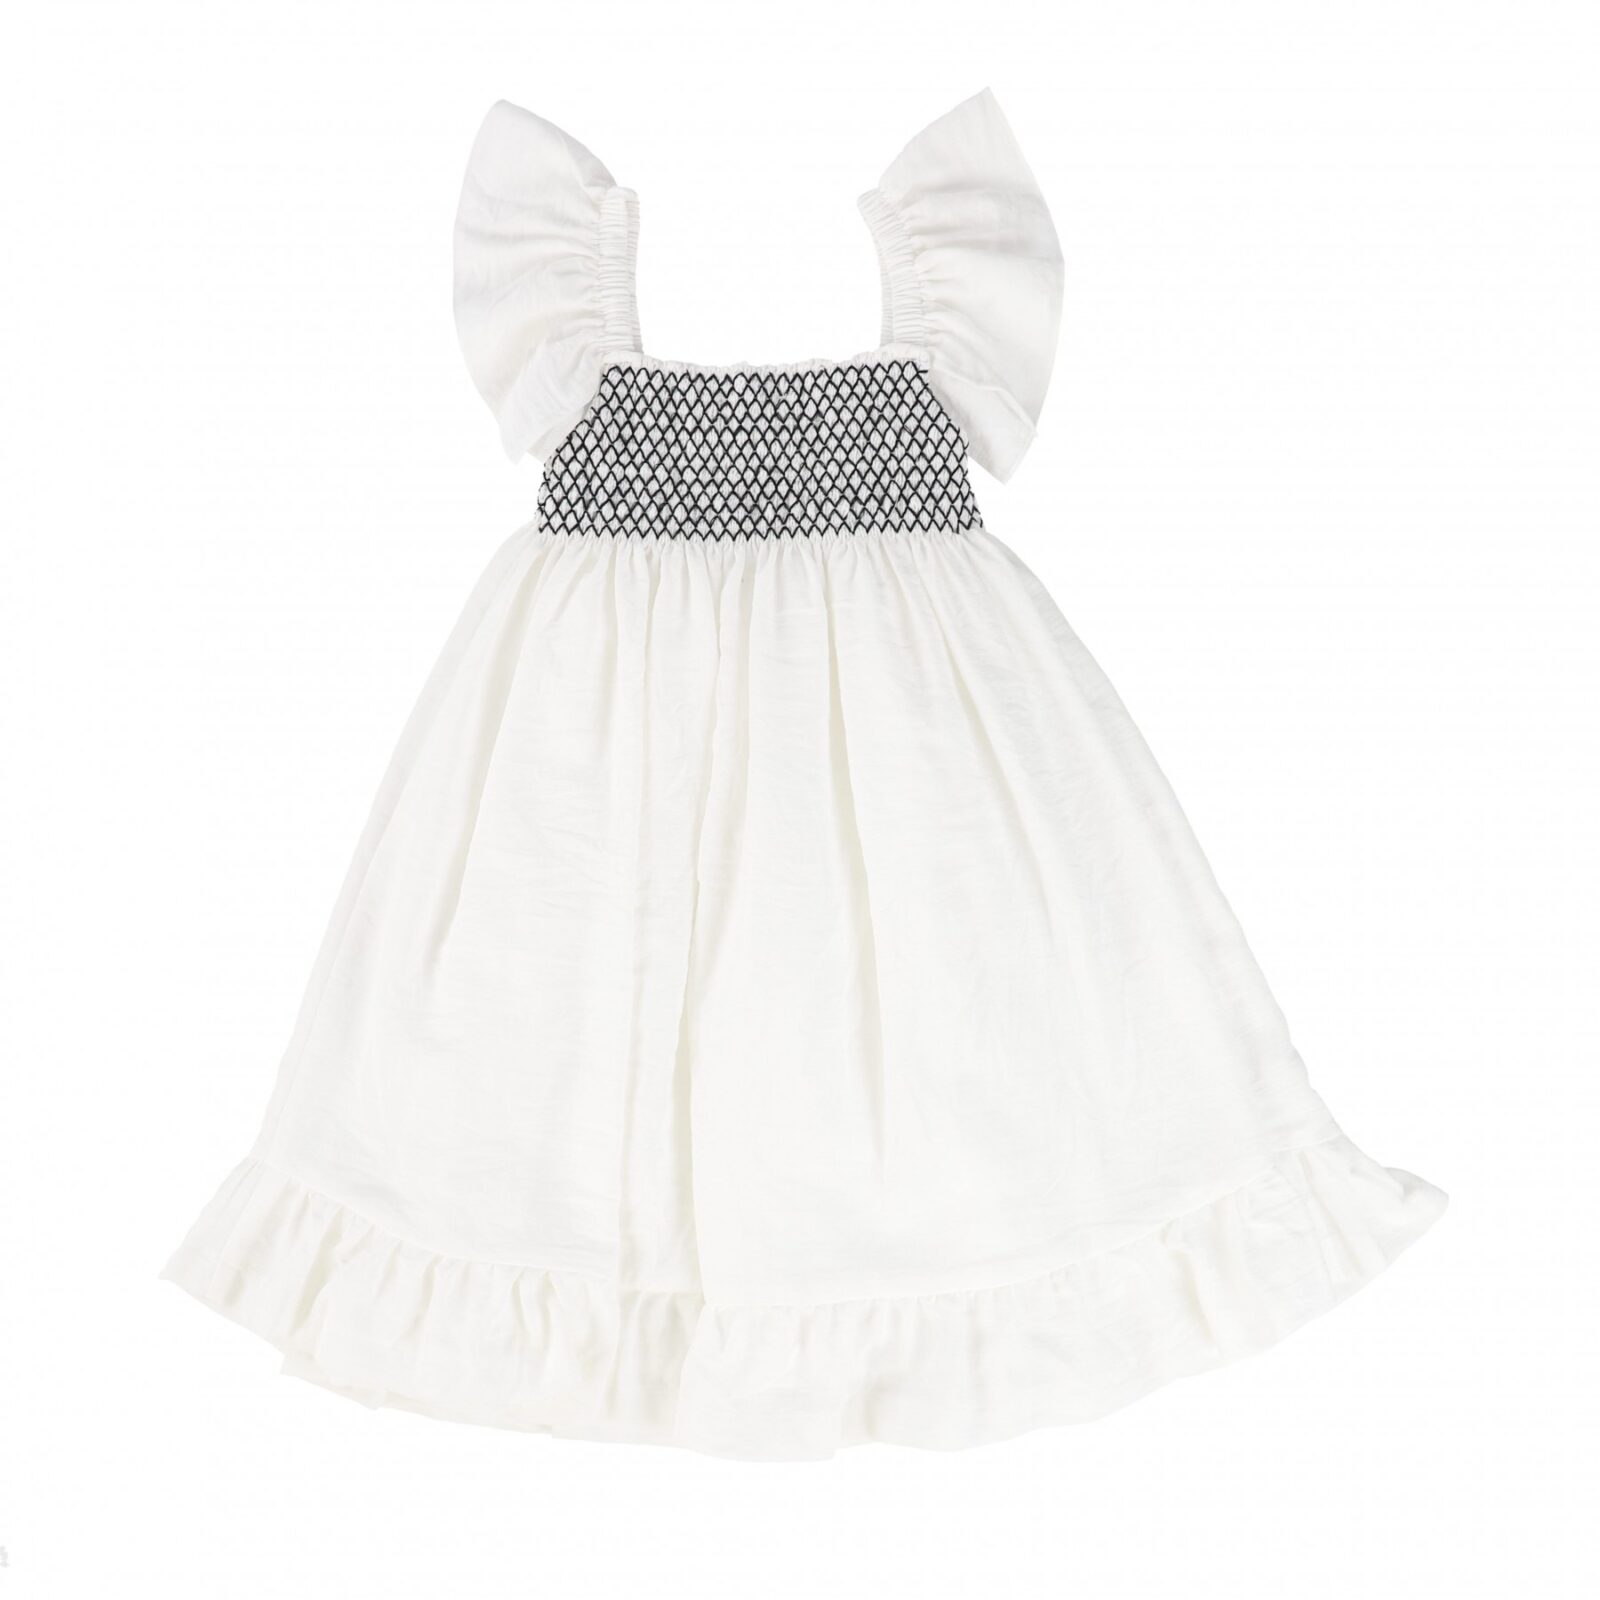 White Smocked Baby Dress